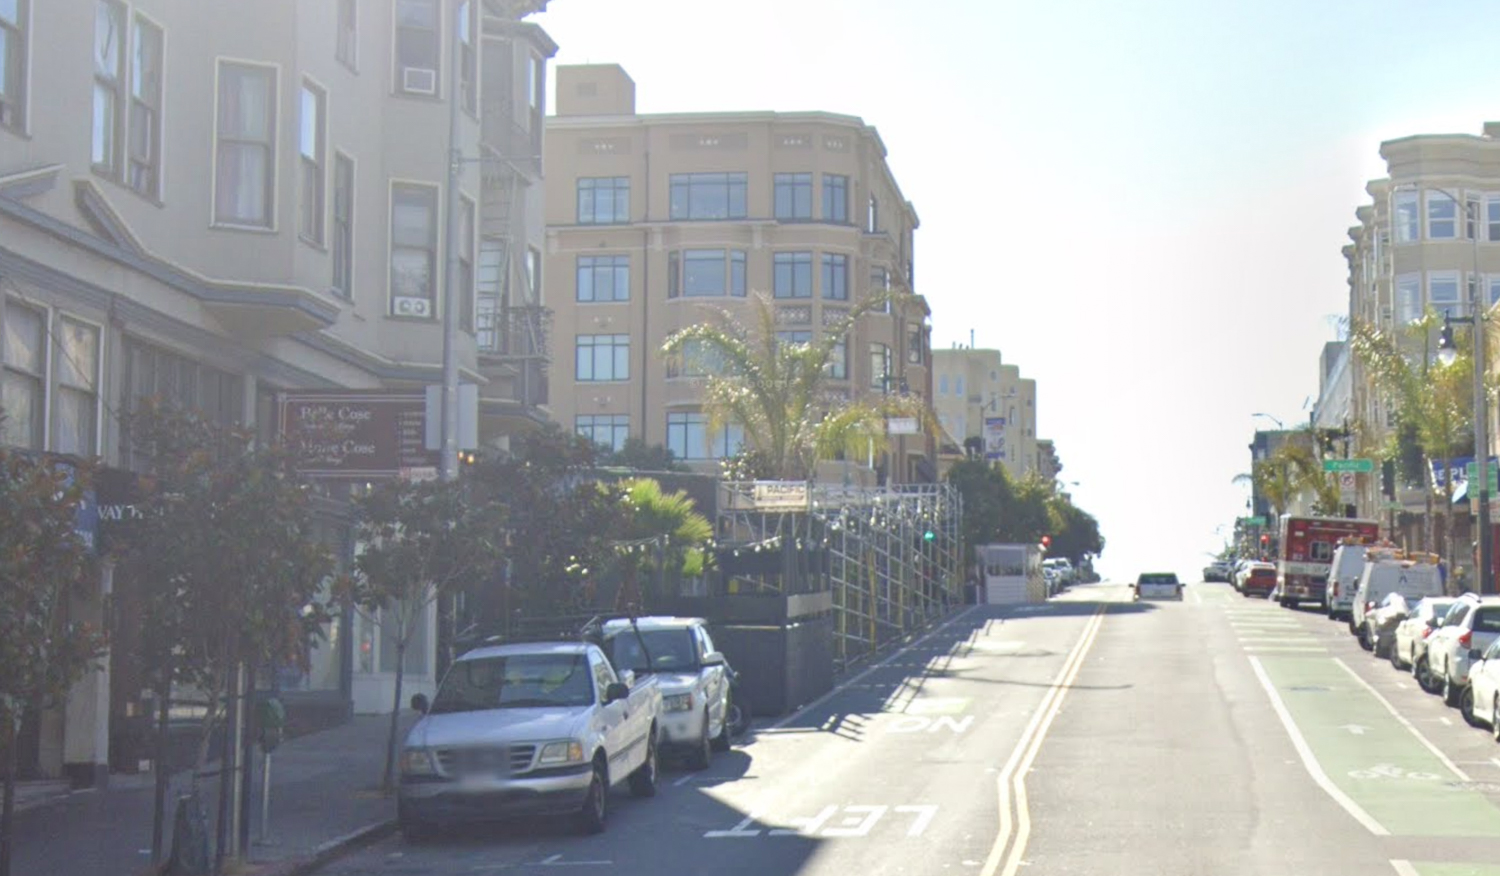 1580 Pacific Avenue, image via Google Street View circa November 2021